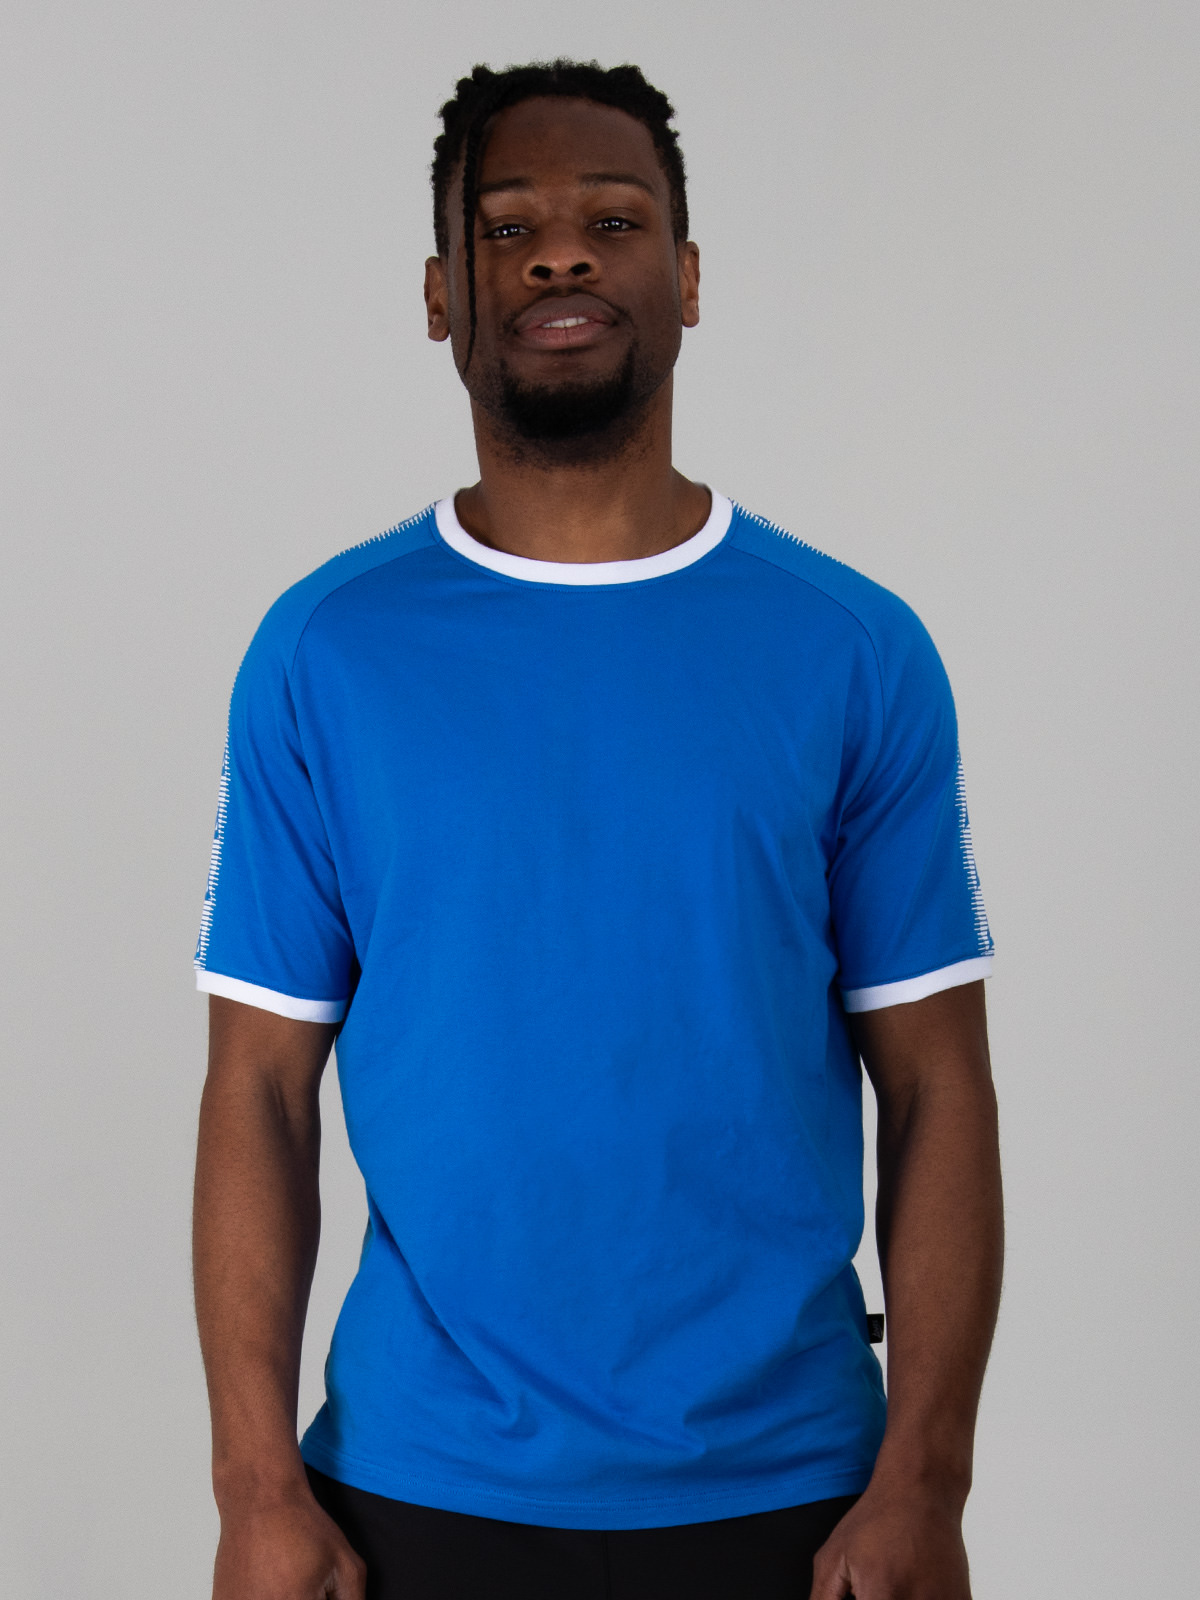 image of a model wearing an avec royal blue cotton t-shirt